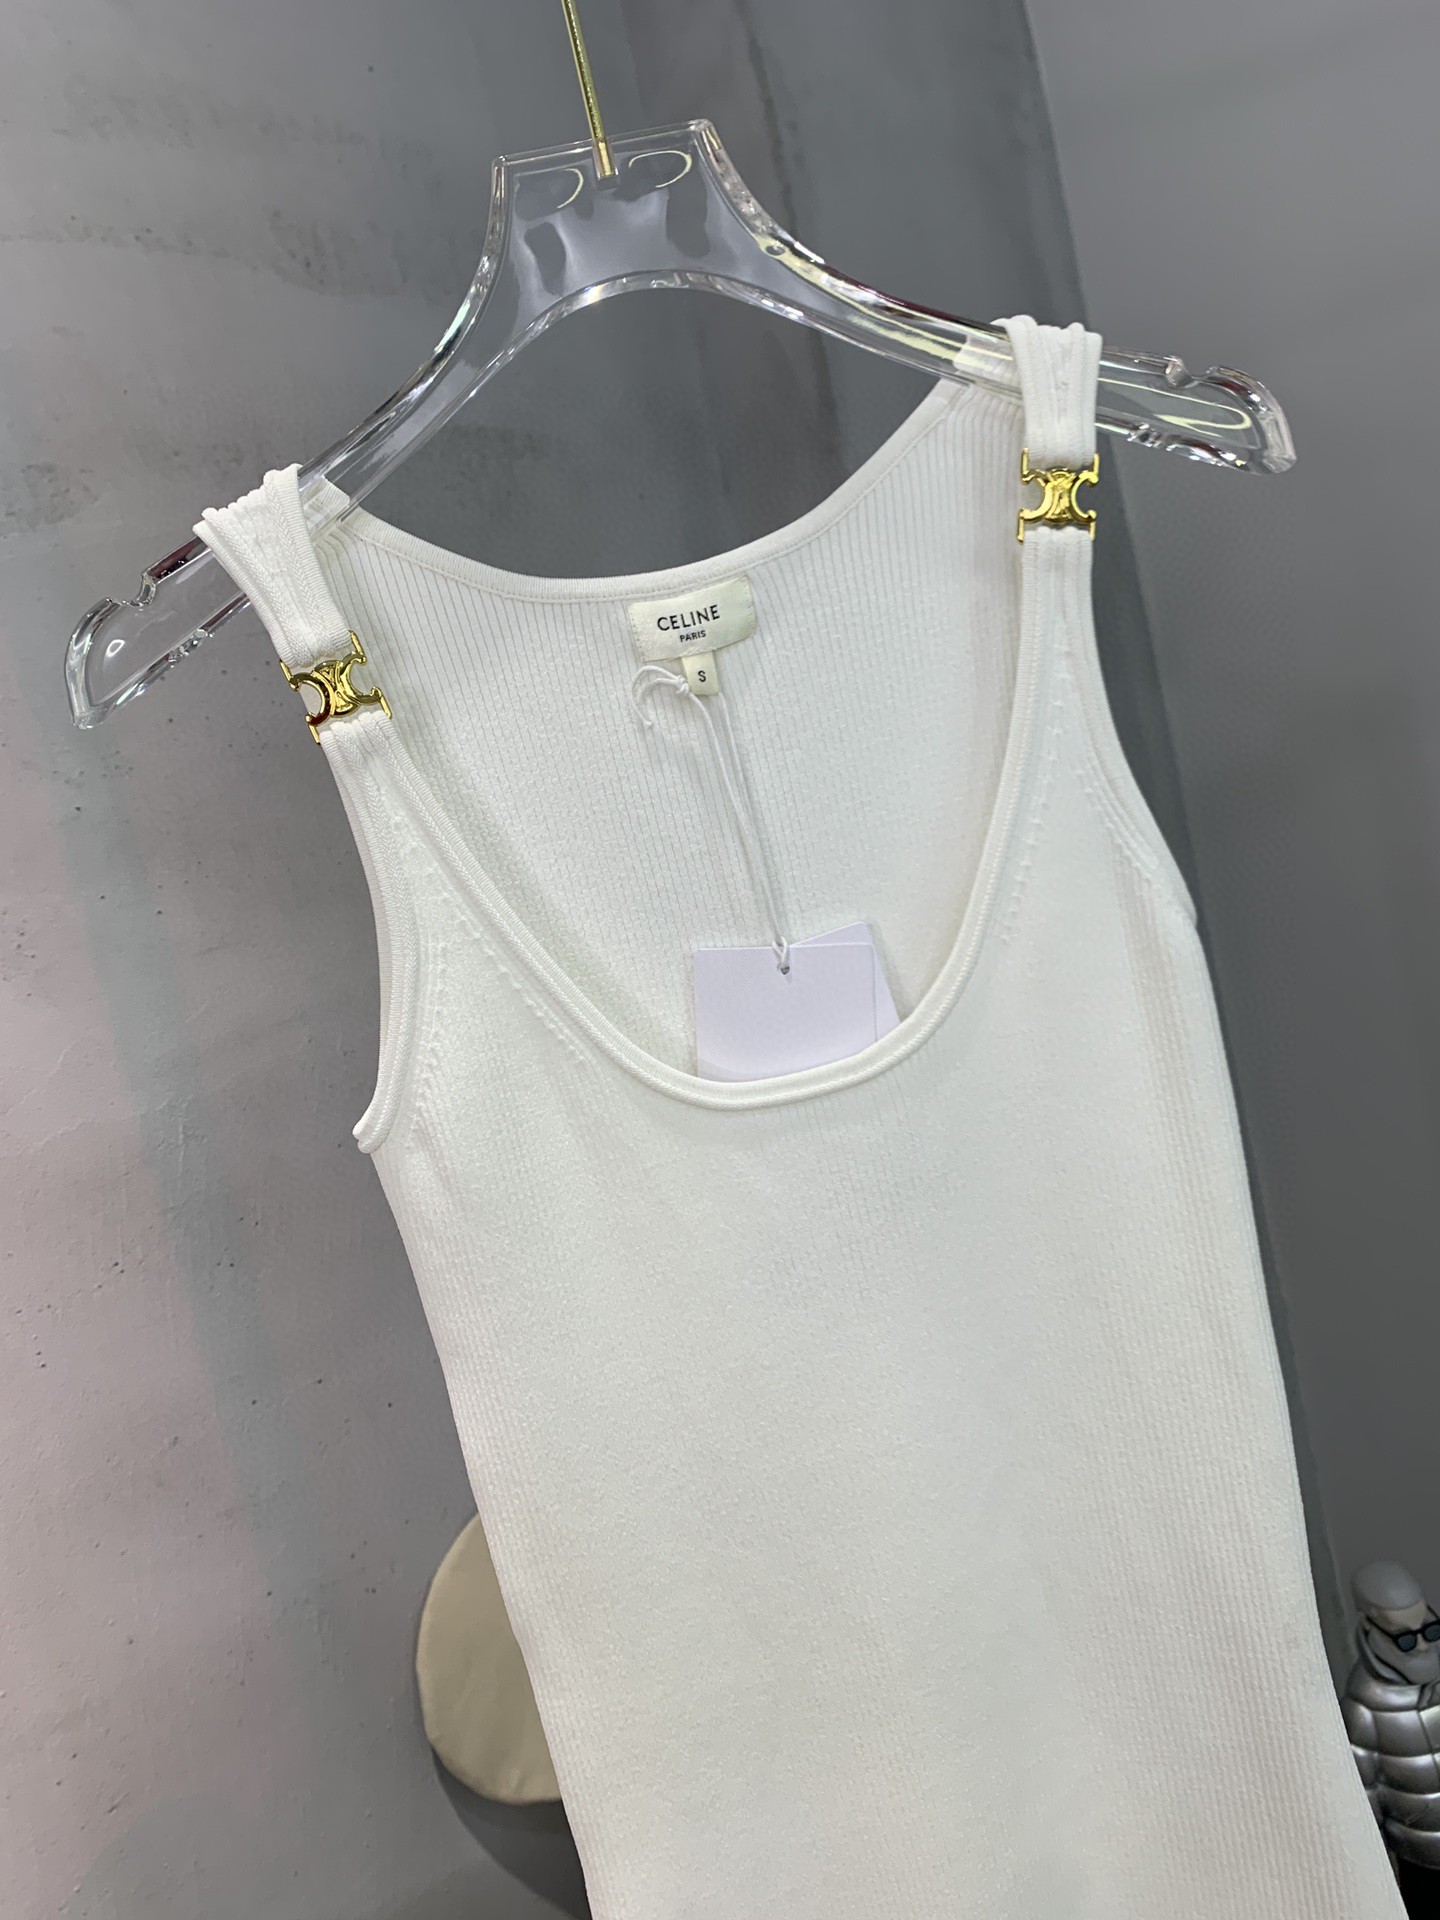 celineceline スカート偽物 ワンピース シンプル 無袖 セクシー レディース 品質保証 高級感 2色可選_8